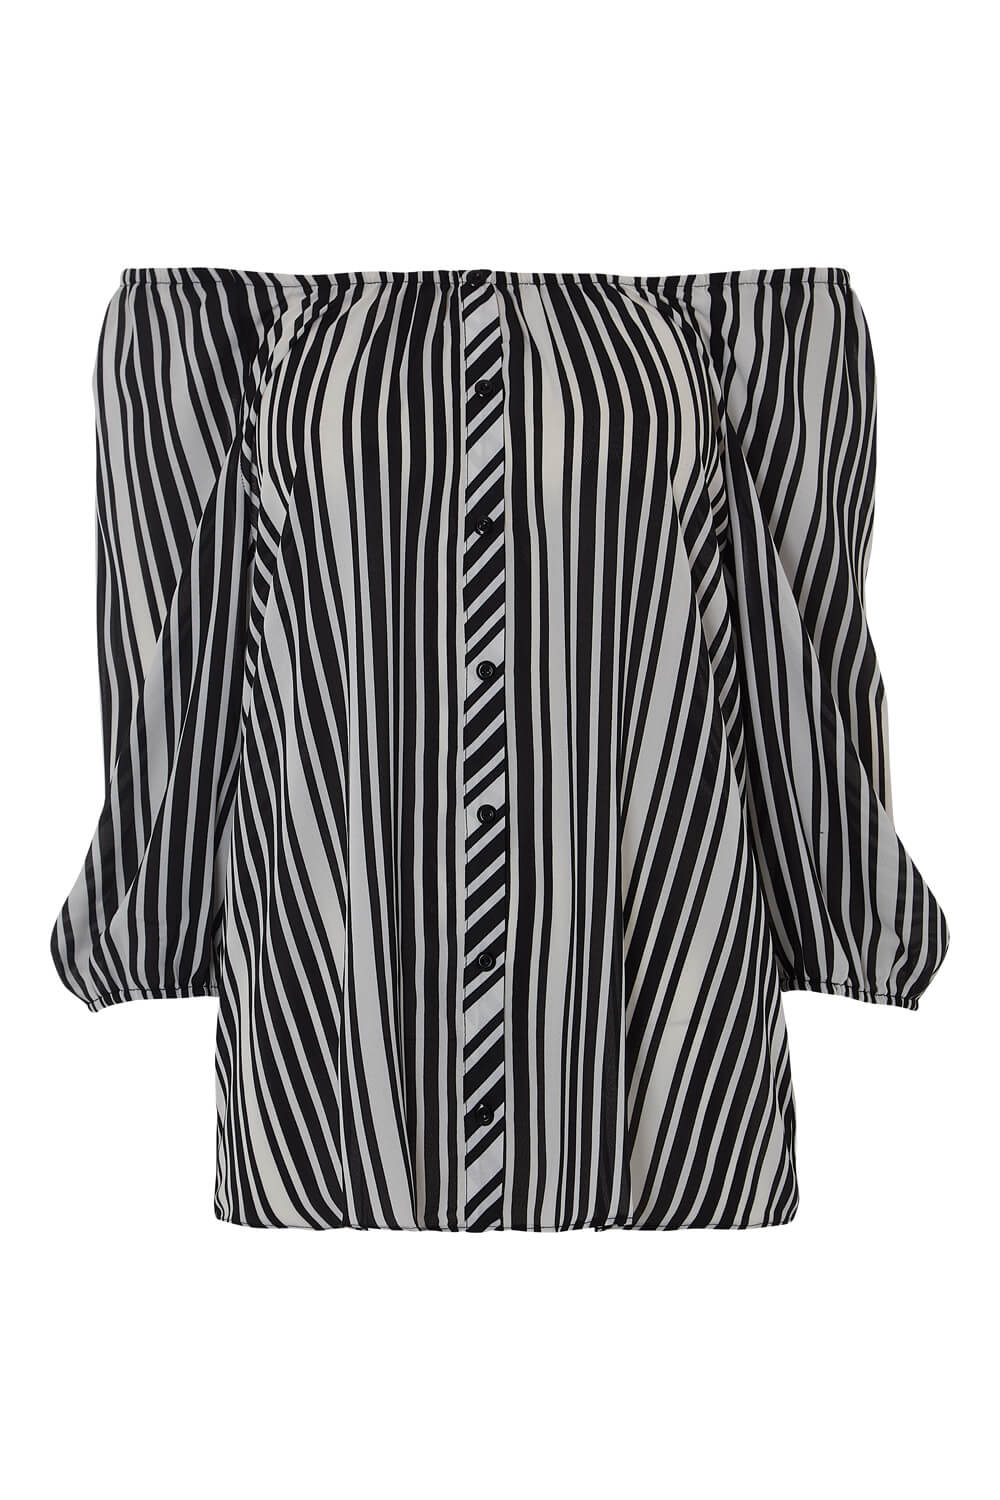 Black Stripe Bardot Top, Image 4 of 4